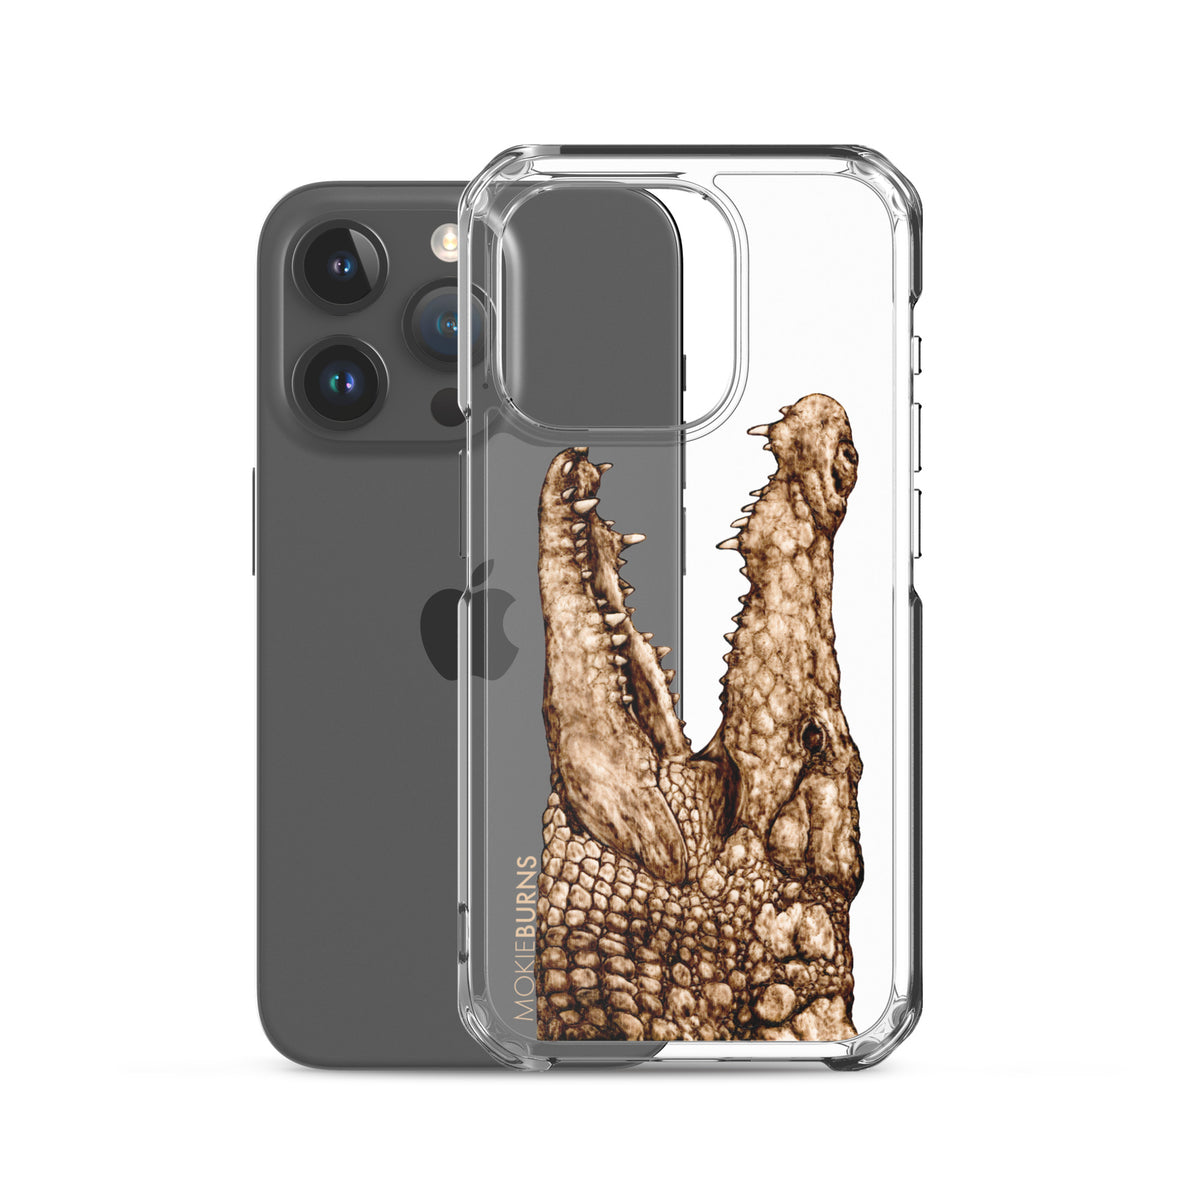 Florida Gator - iPhone Case [all sizes] - FREE SHIPPING